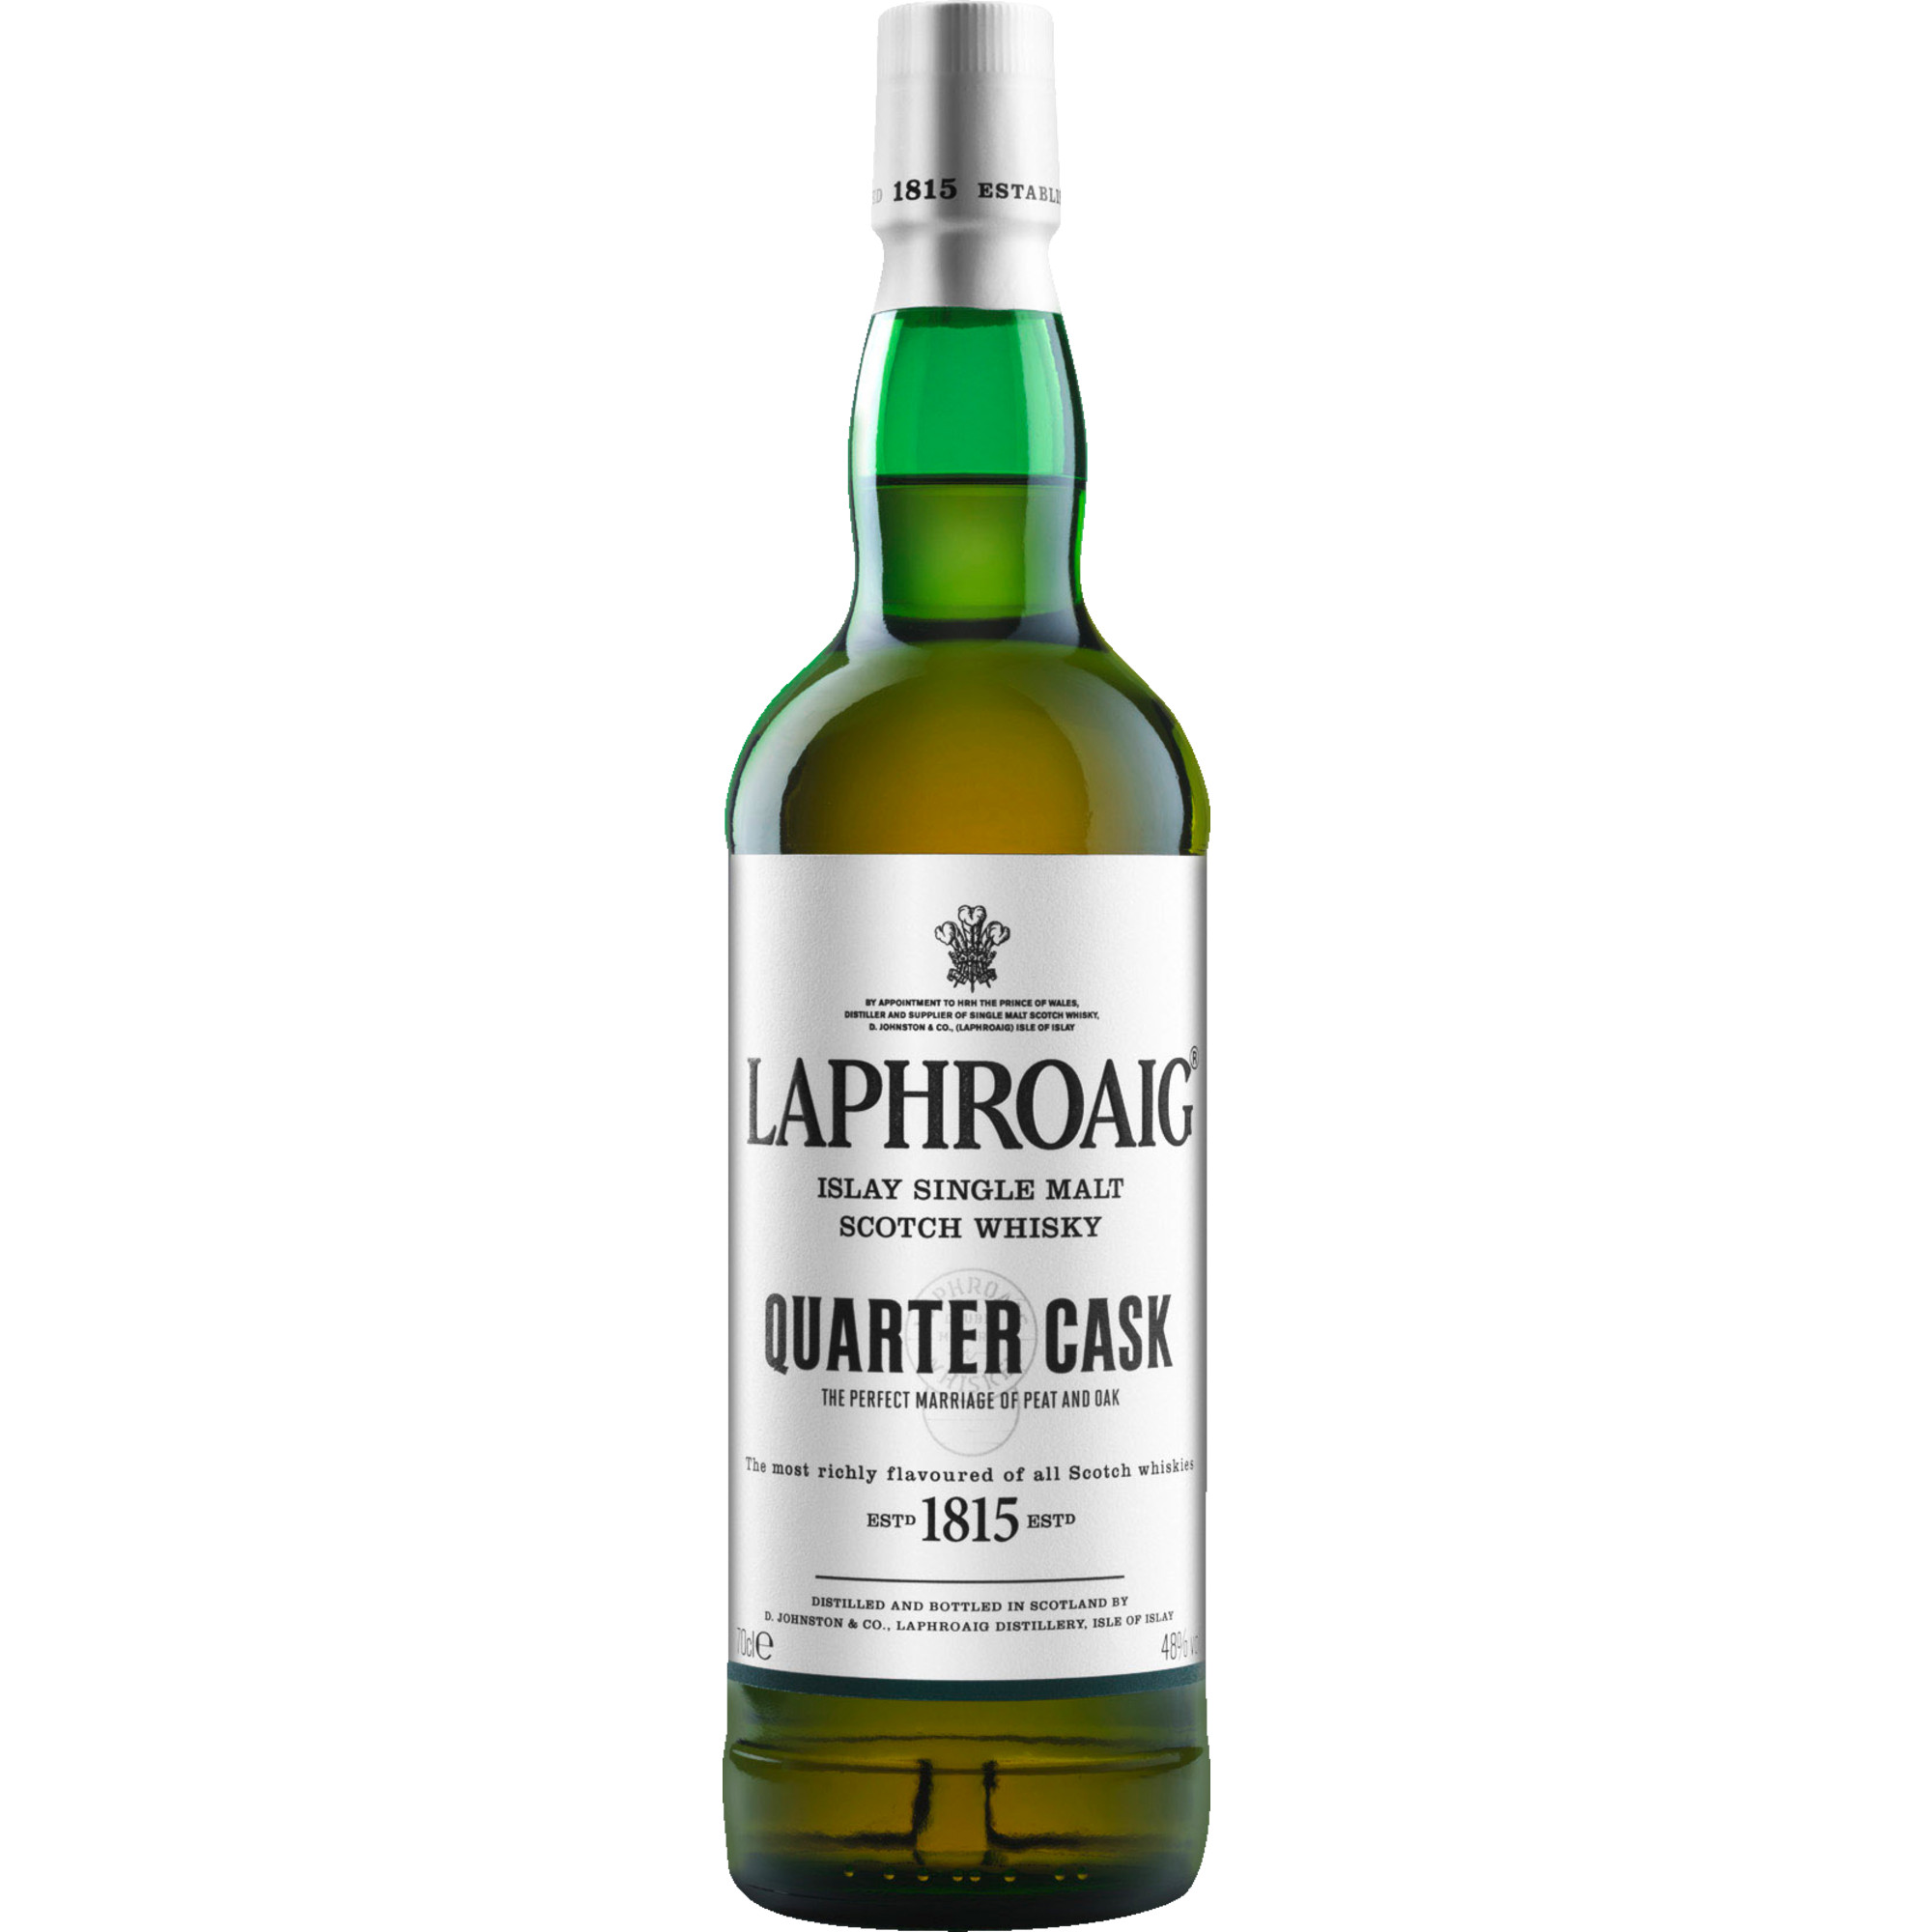 Laphroaig Quarter Cask Single Malt Scotch Whisky, 48 % vol. 0,7 L, Schottland, Spirituosen D. Johnston & Company (Laphroaig) Ltd, Springburn Bond, Carlisle St, Glasgow G21 1EQ, Scotland Hawesko DE